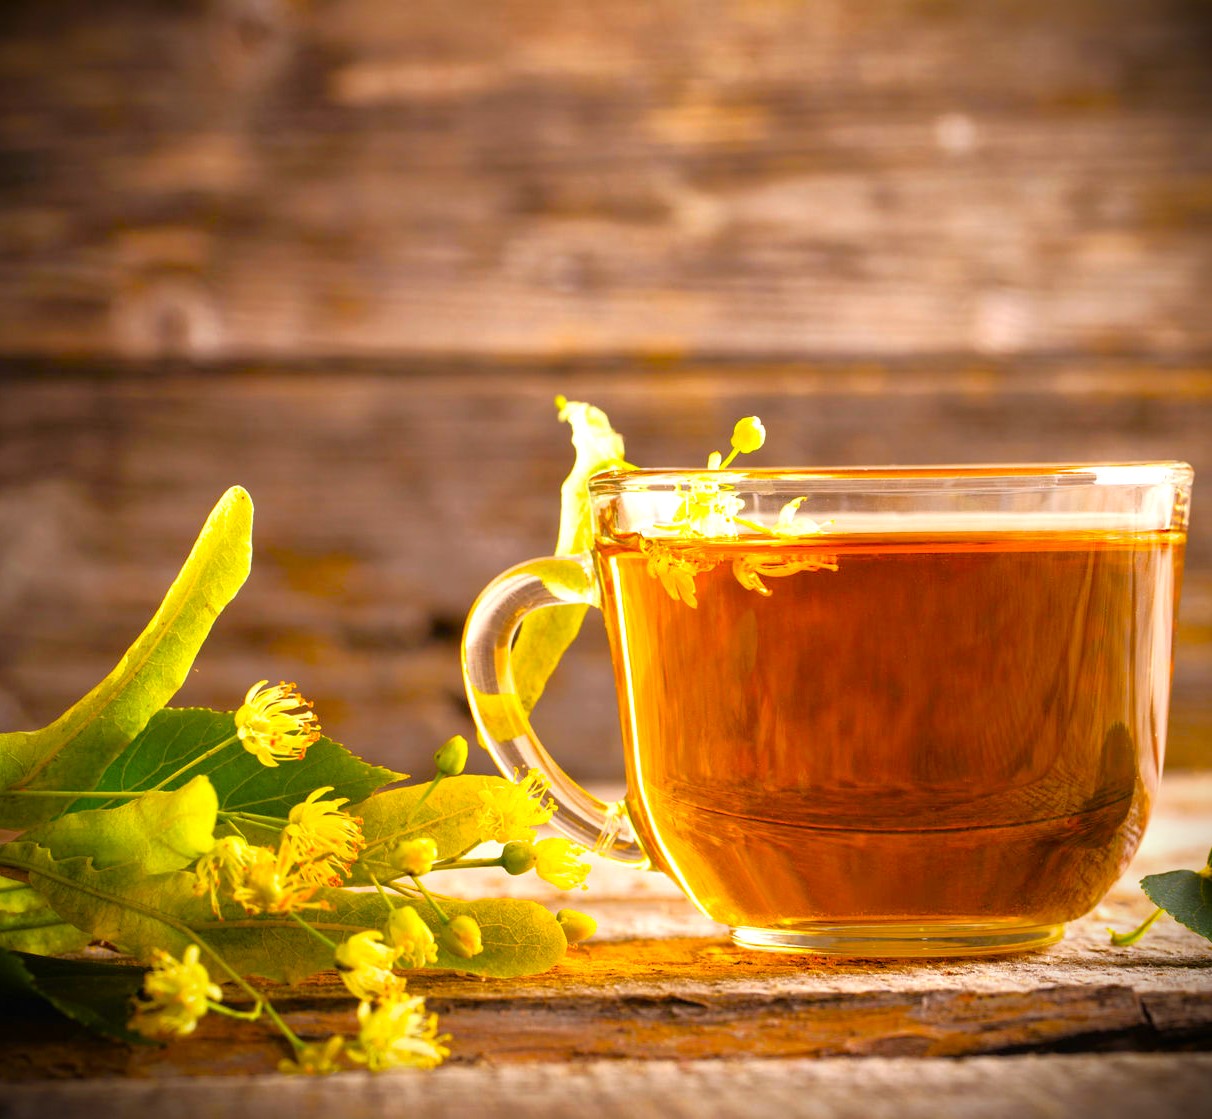 What health benefits does linden tea have?